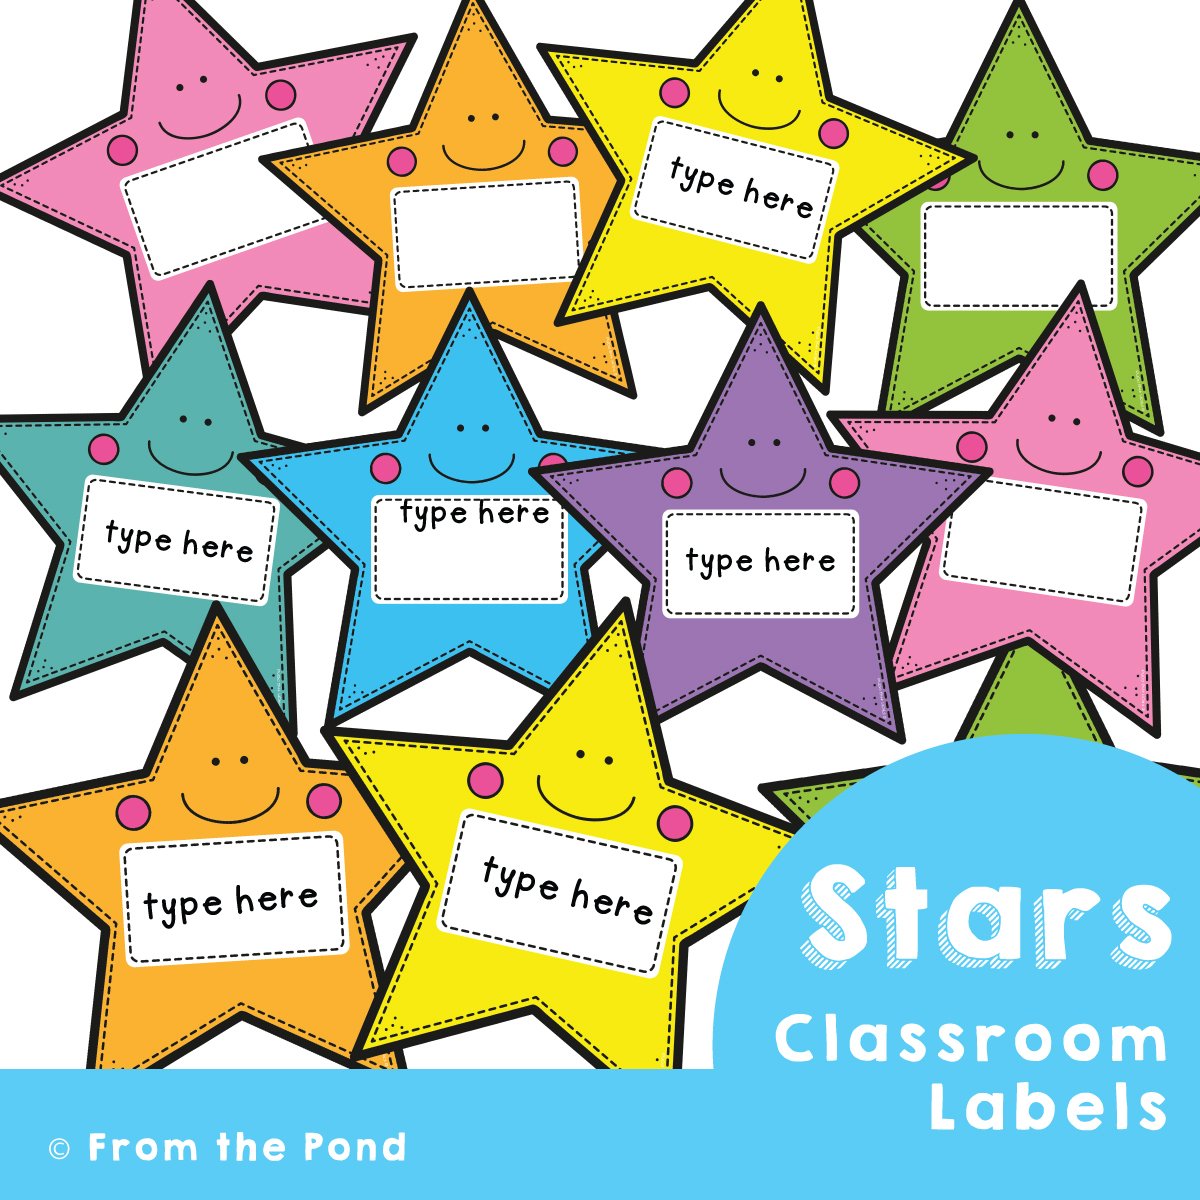 star-classroom-labels.jpg